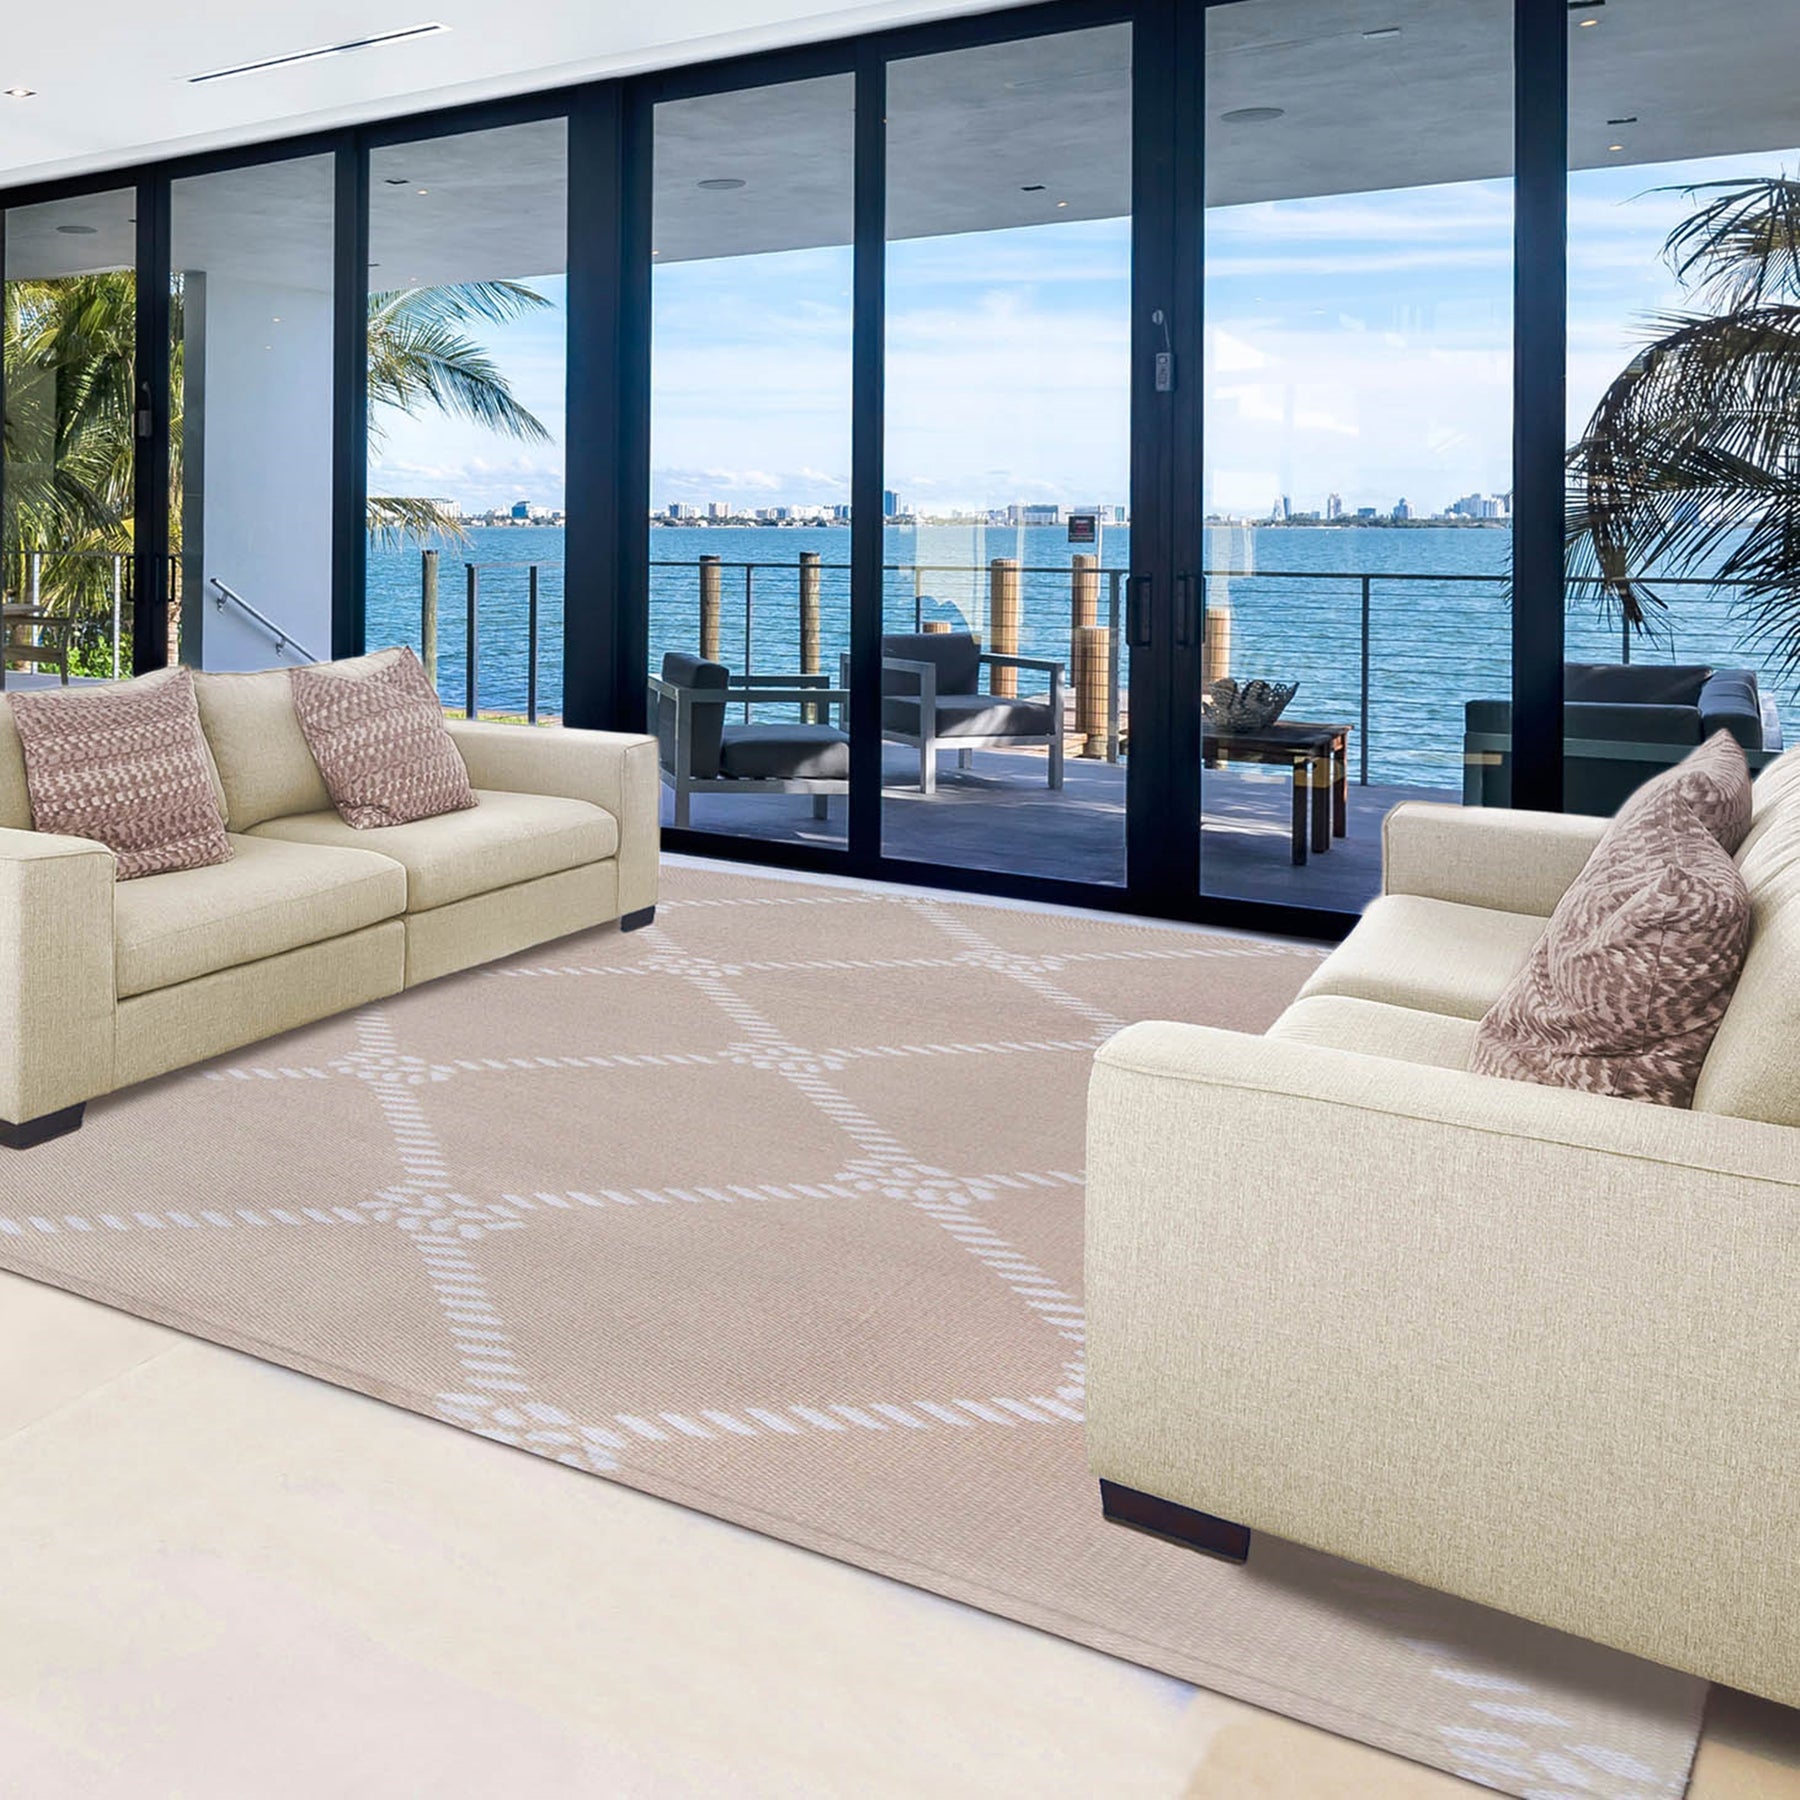 Superior Coastal Geometric Lattice Indoor Outdoor Luxurious Area Rug - Beige